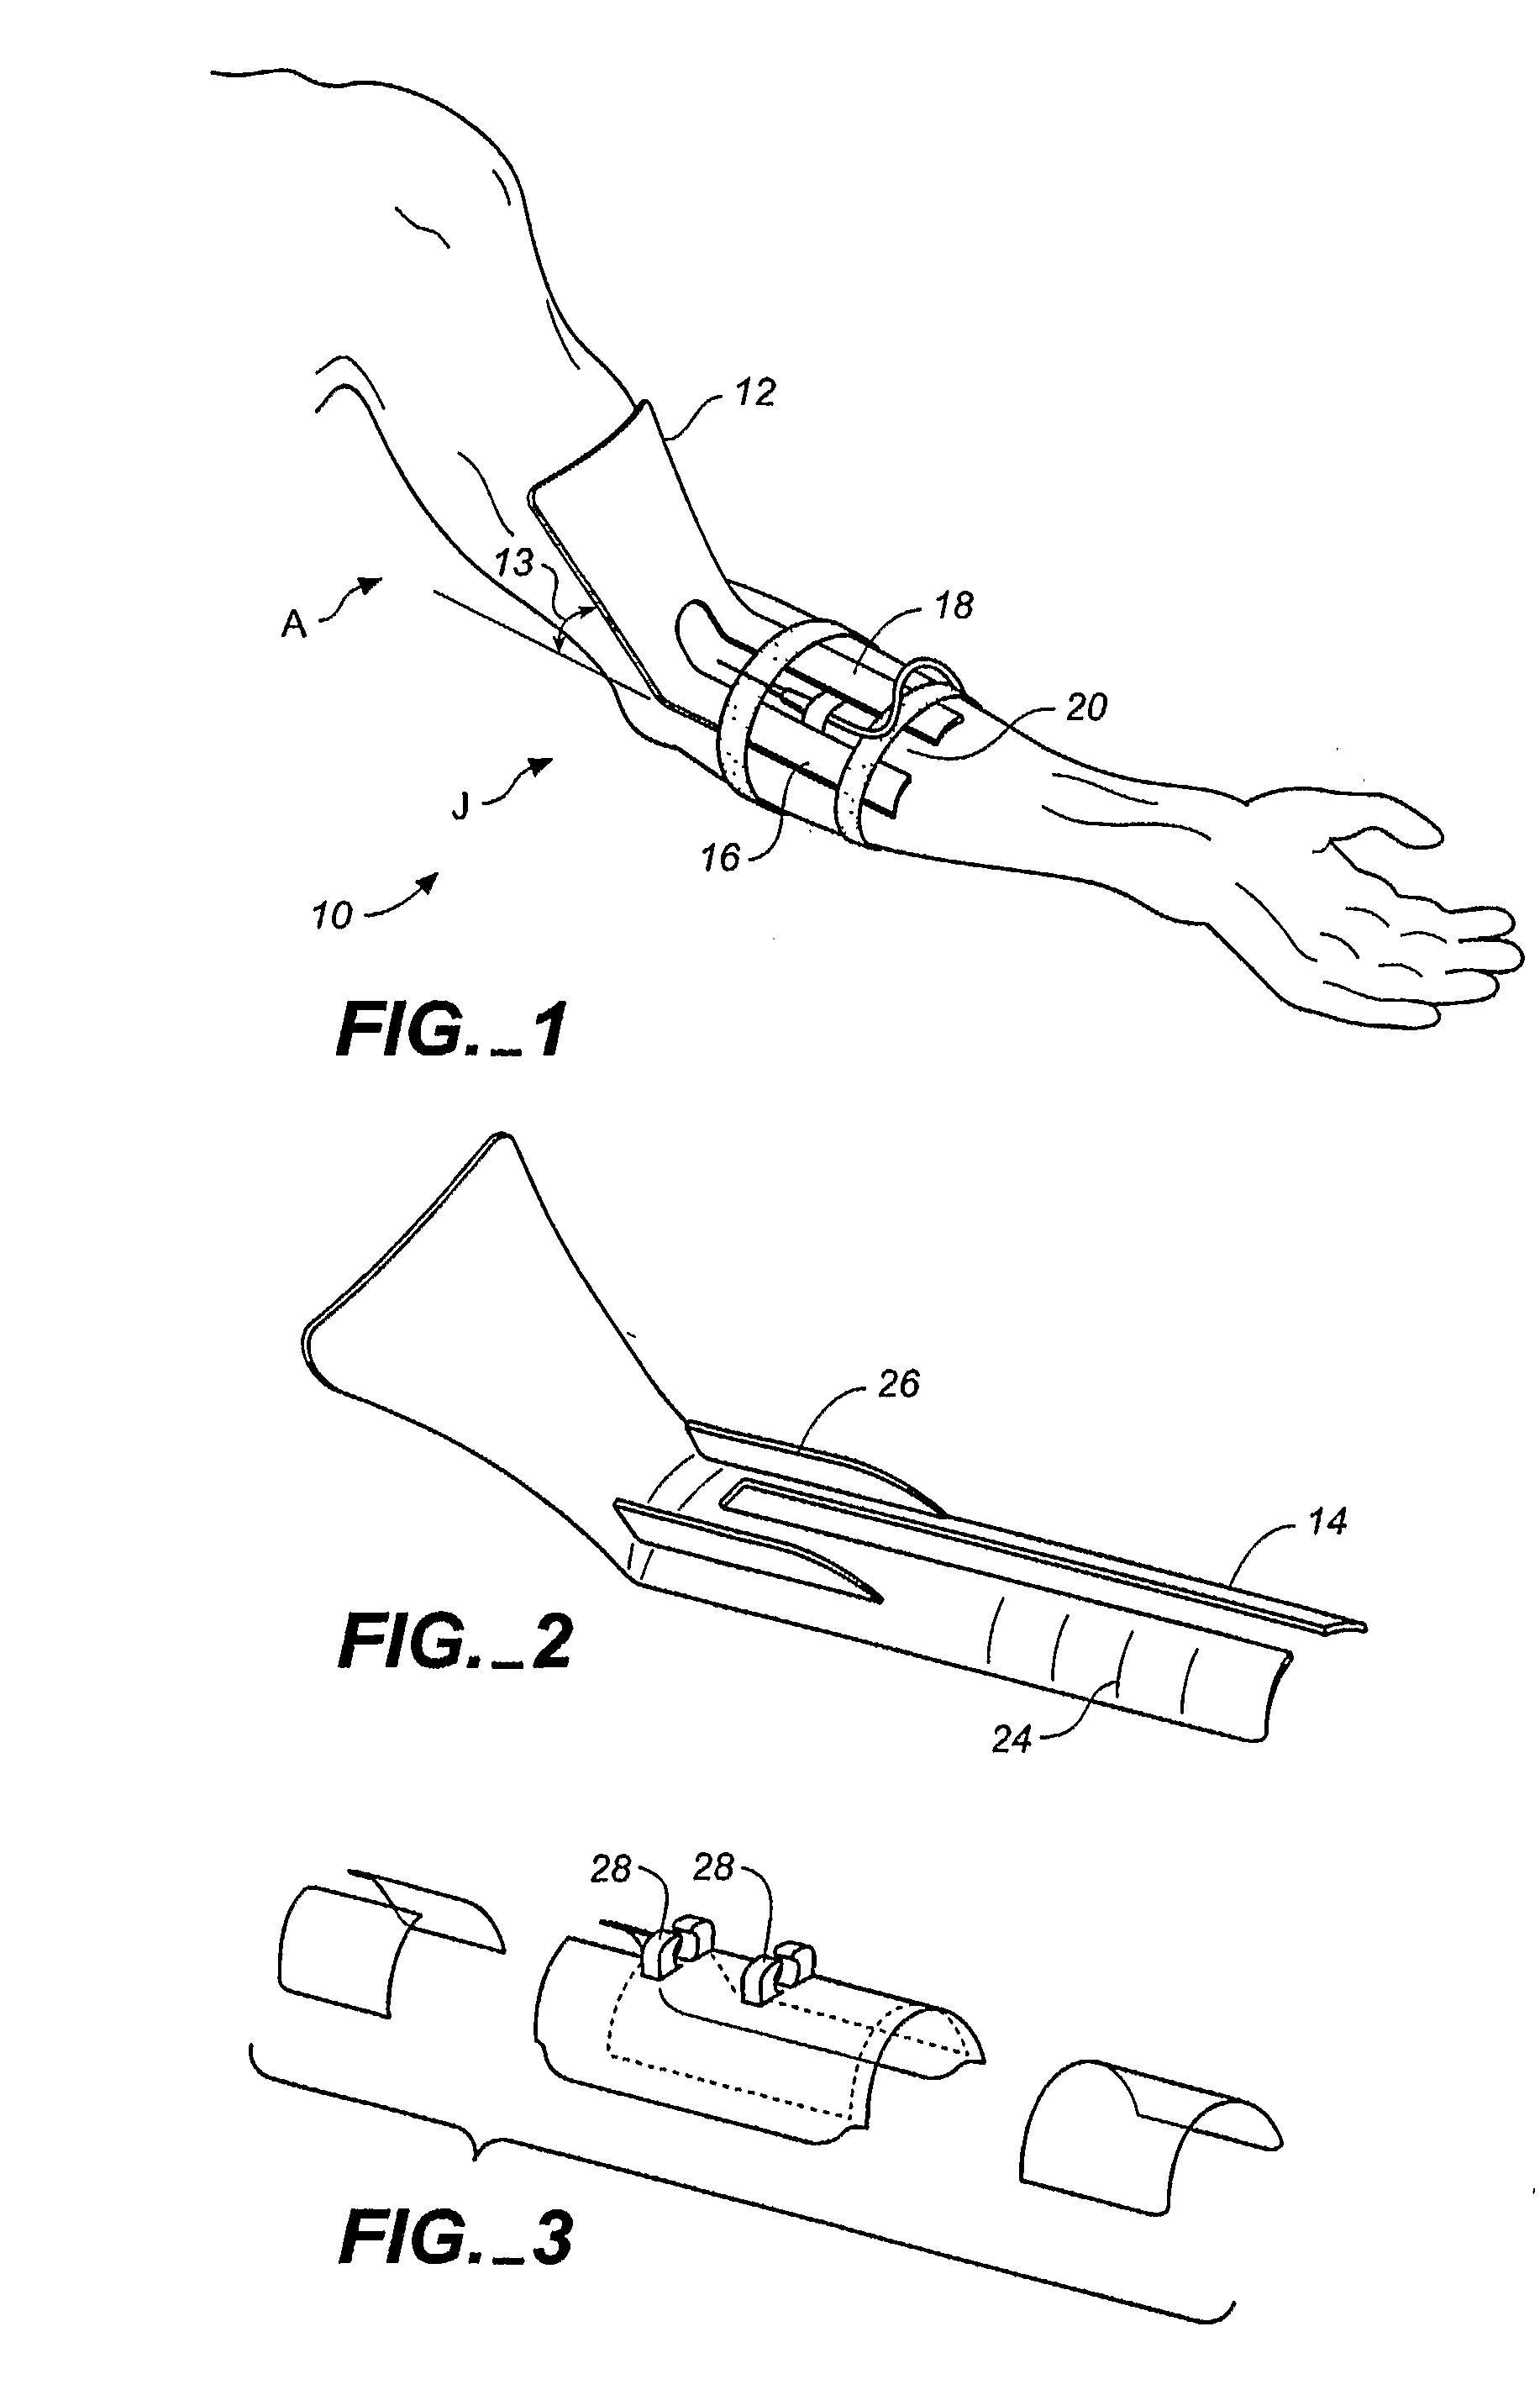 IV Compatible limb stabilization apparatus